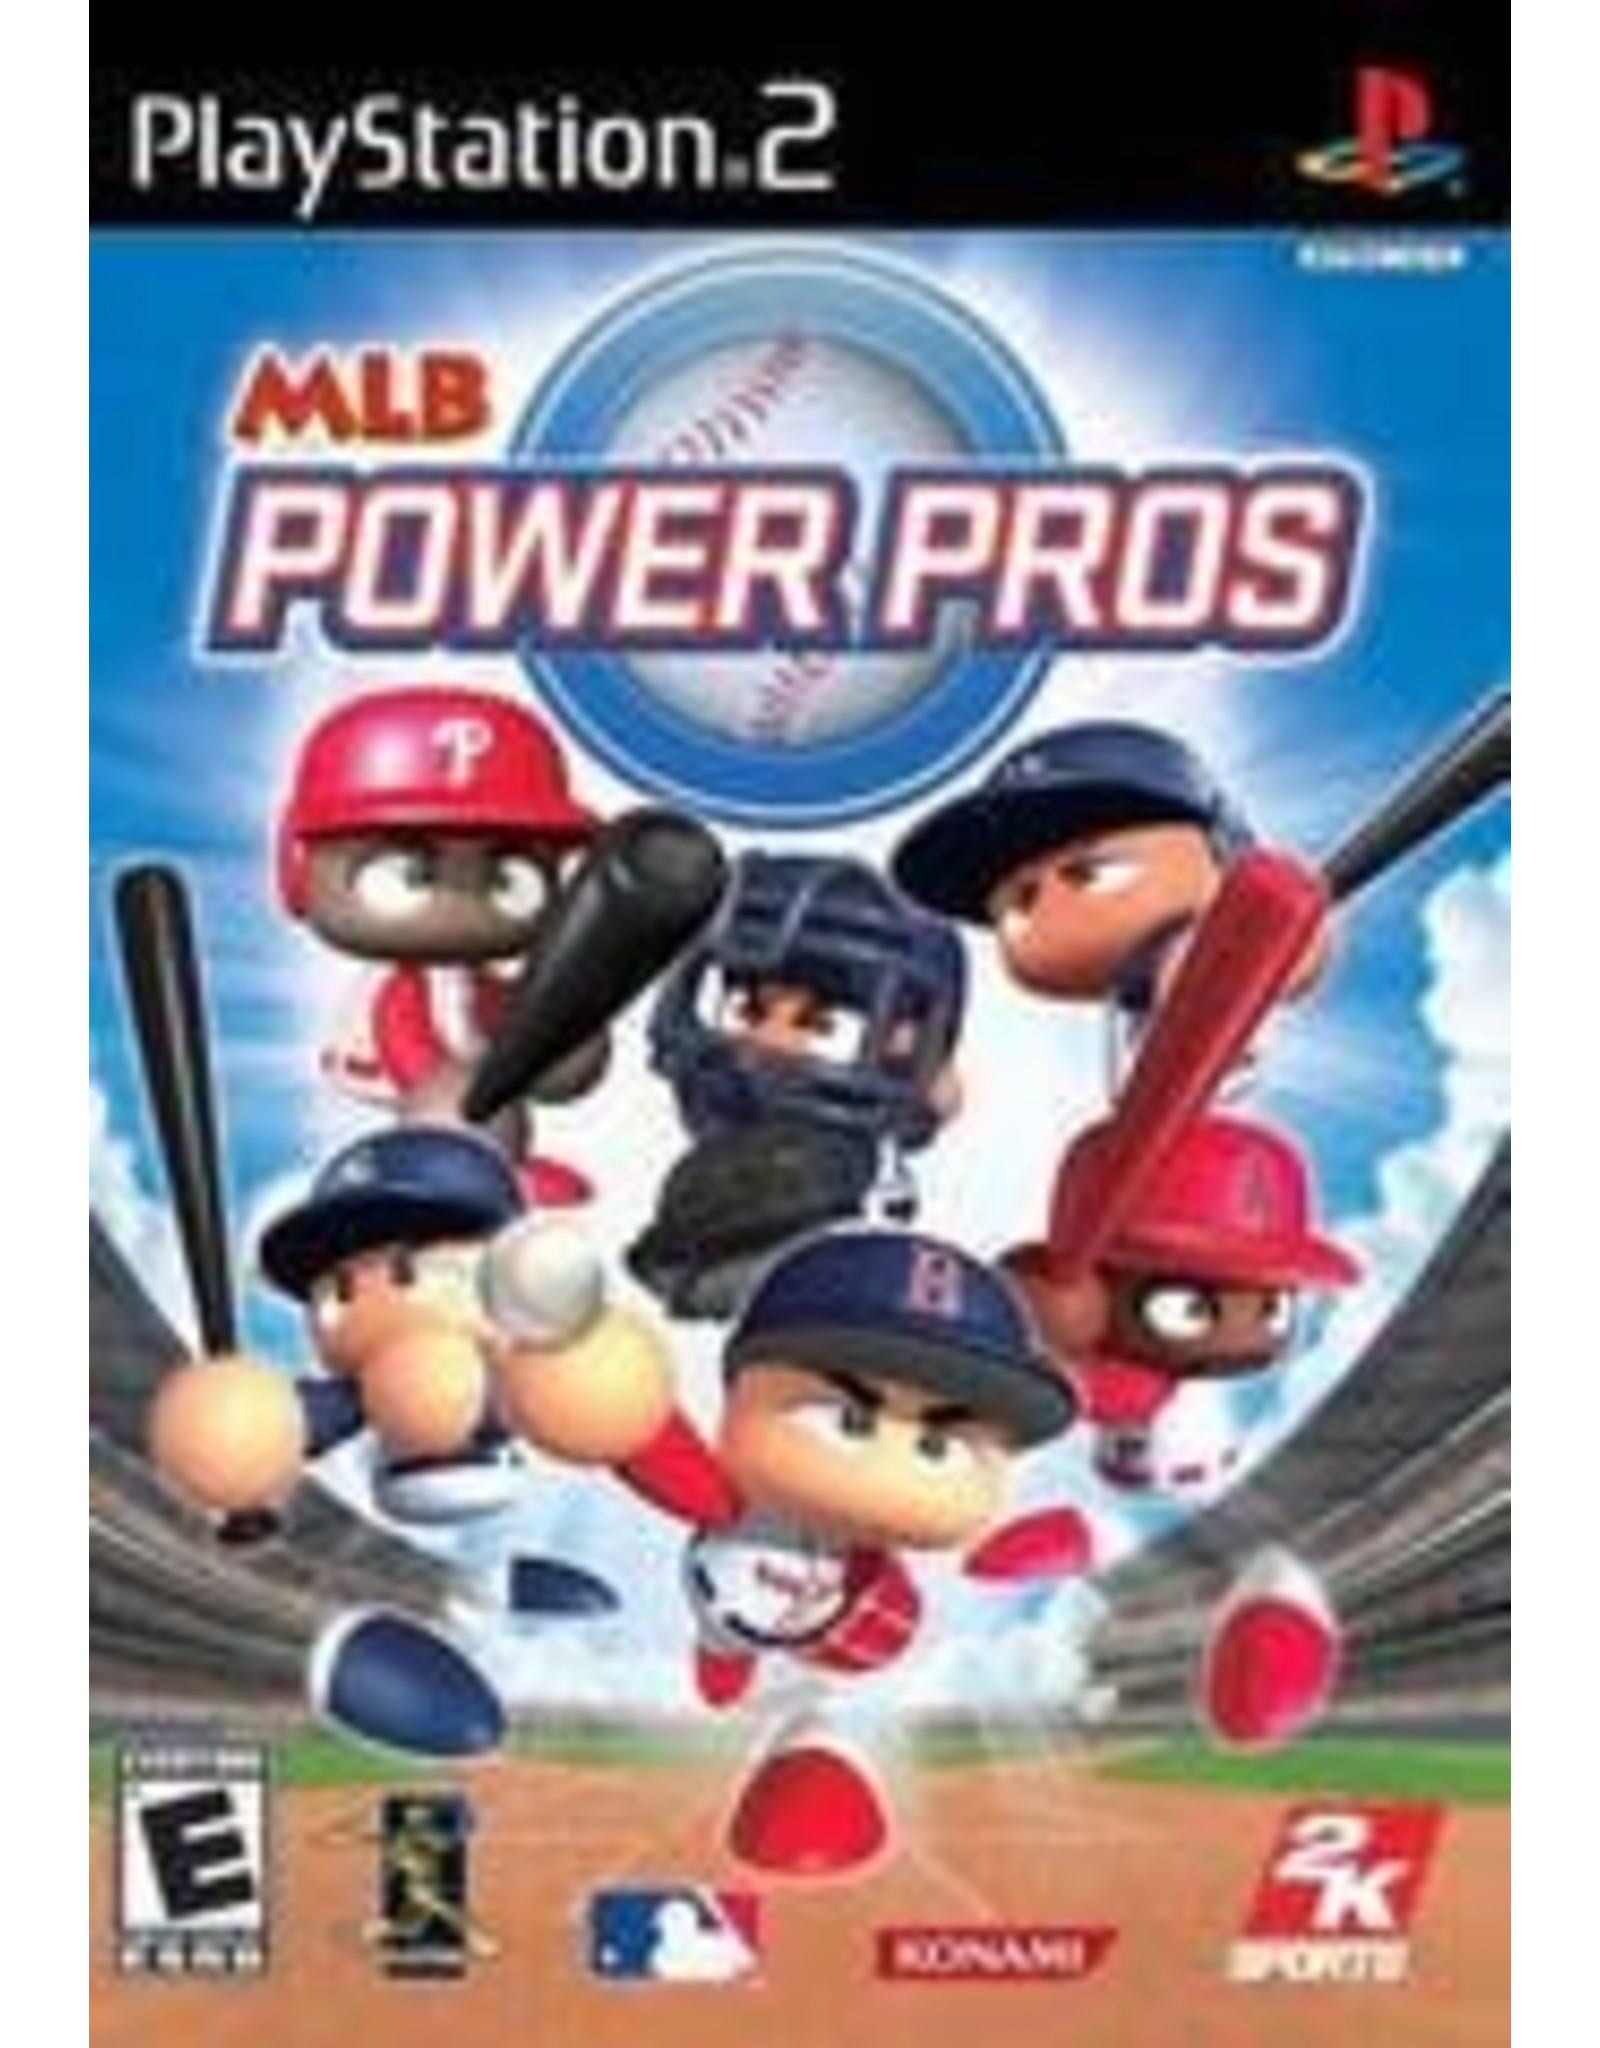 Playstation 2 MLB Power Pros (CiB)